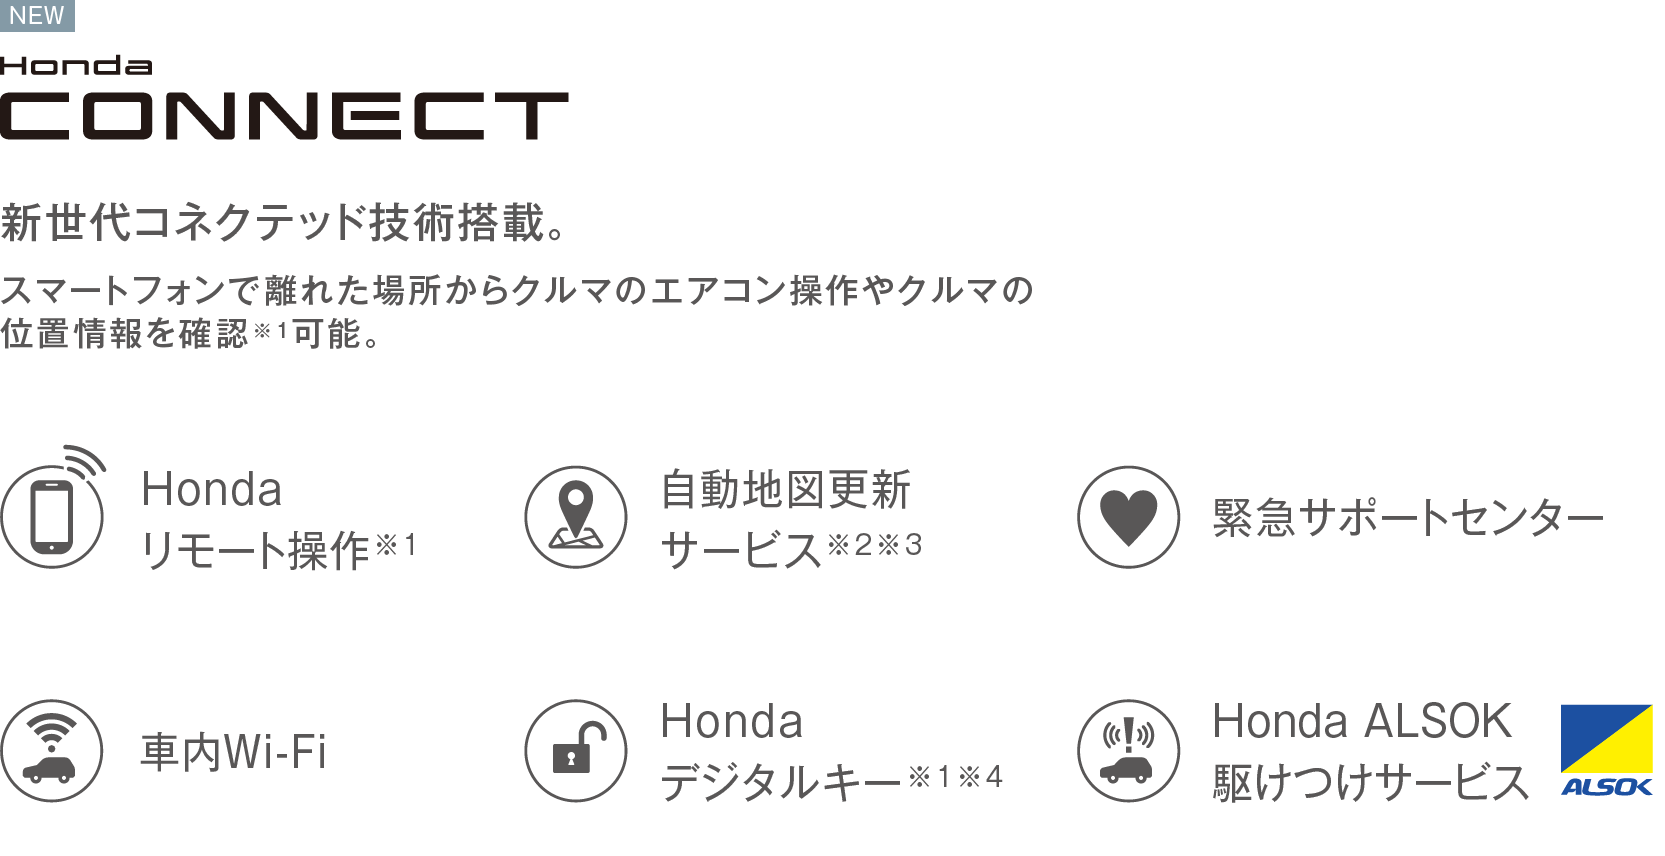 Honda CONNECT 新世代コネクテッド技術搭載。